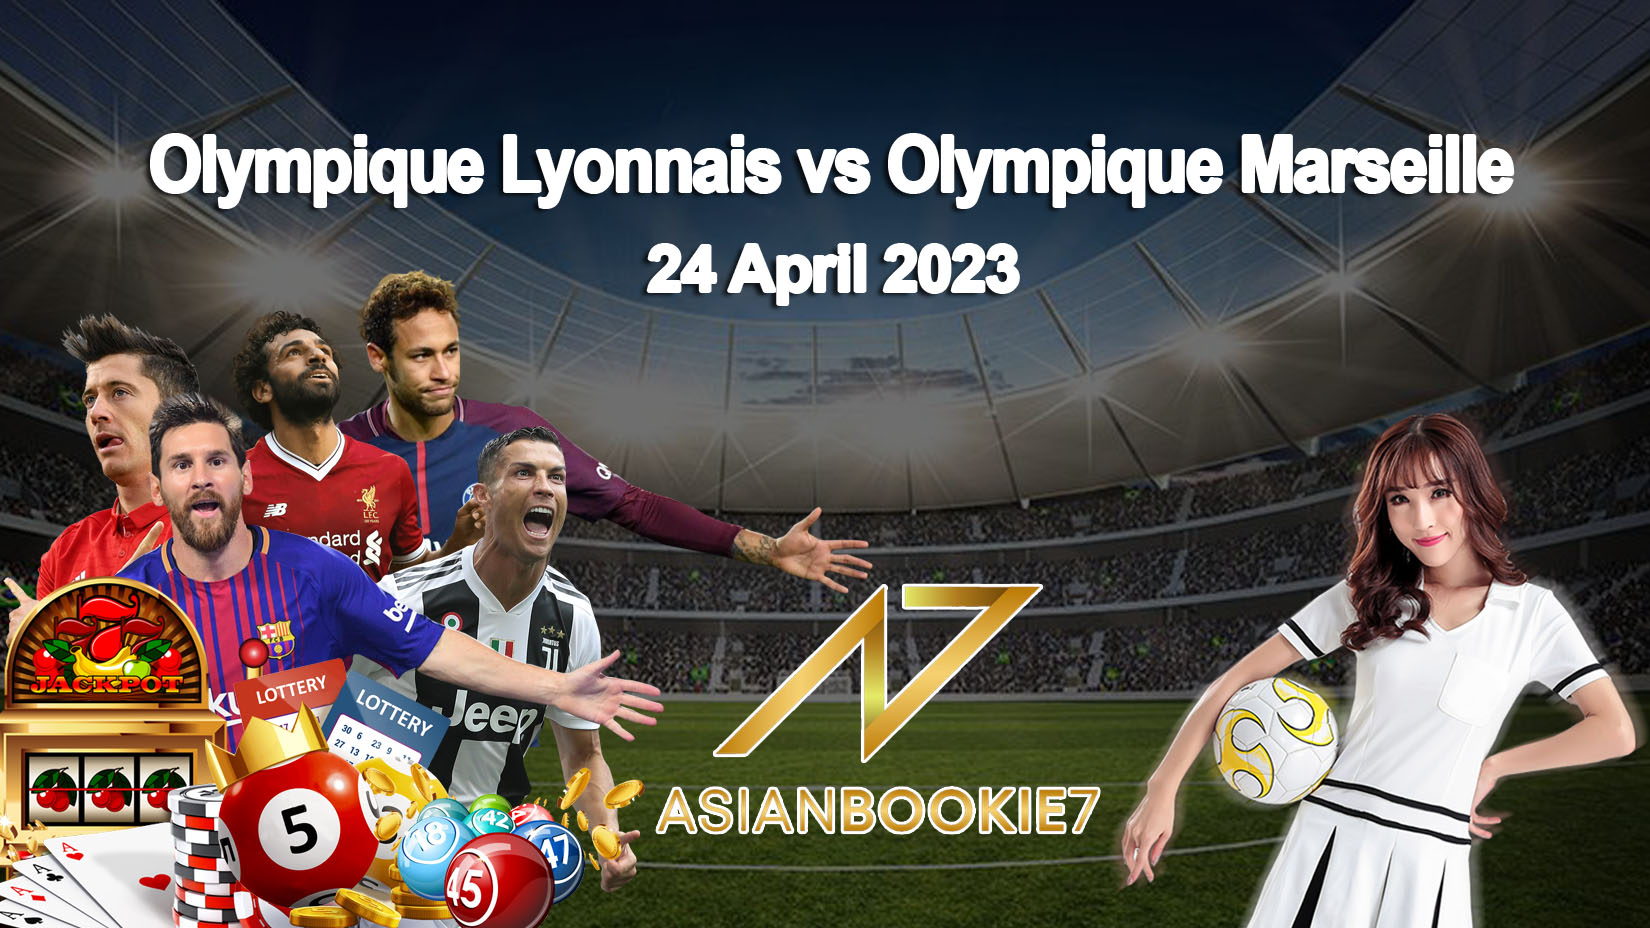 Prediksi Olympique Lyonnais vs Olympique Marseille 24 April 2023